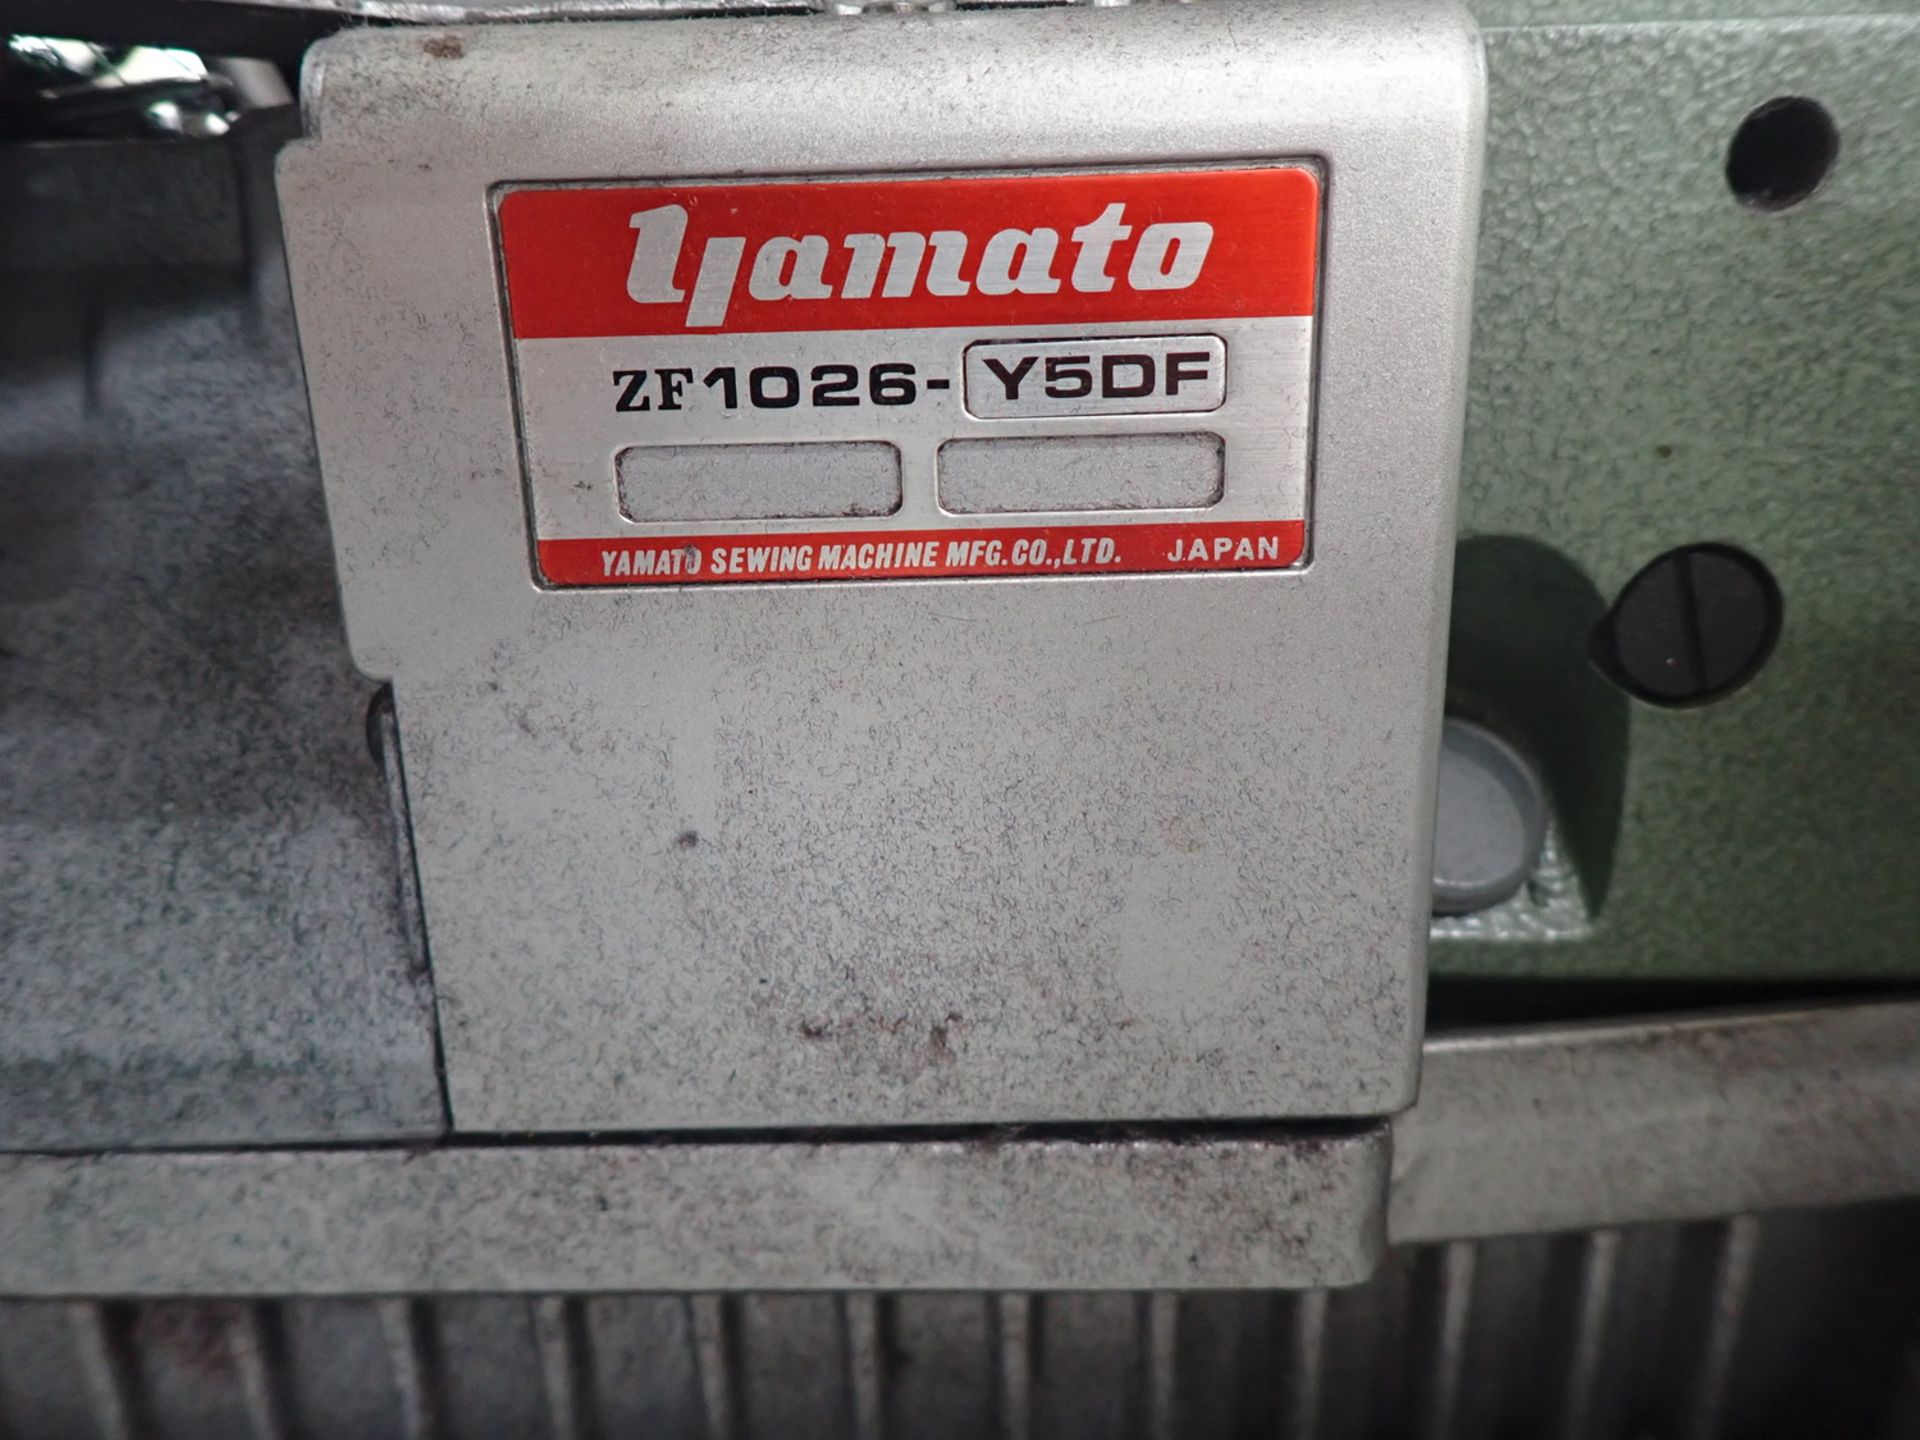 YAMATO ZF1026-Y50F 4-THREAD SERGER W/ NEEDLE POSITIONER & BINDER FOLDER (110V) - Image 2 of 6